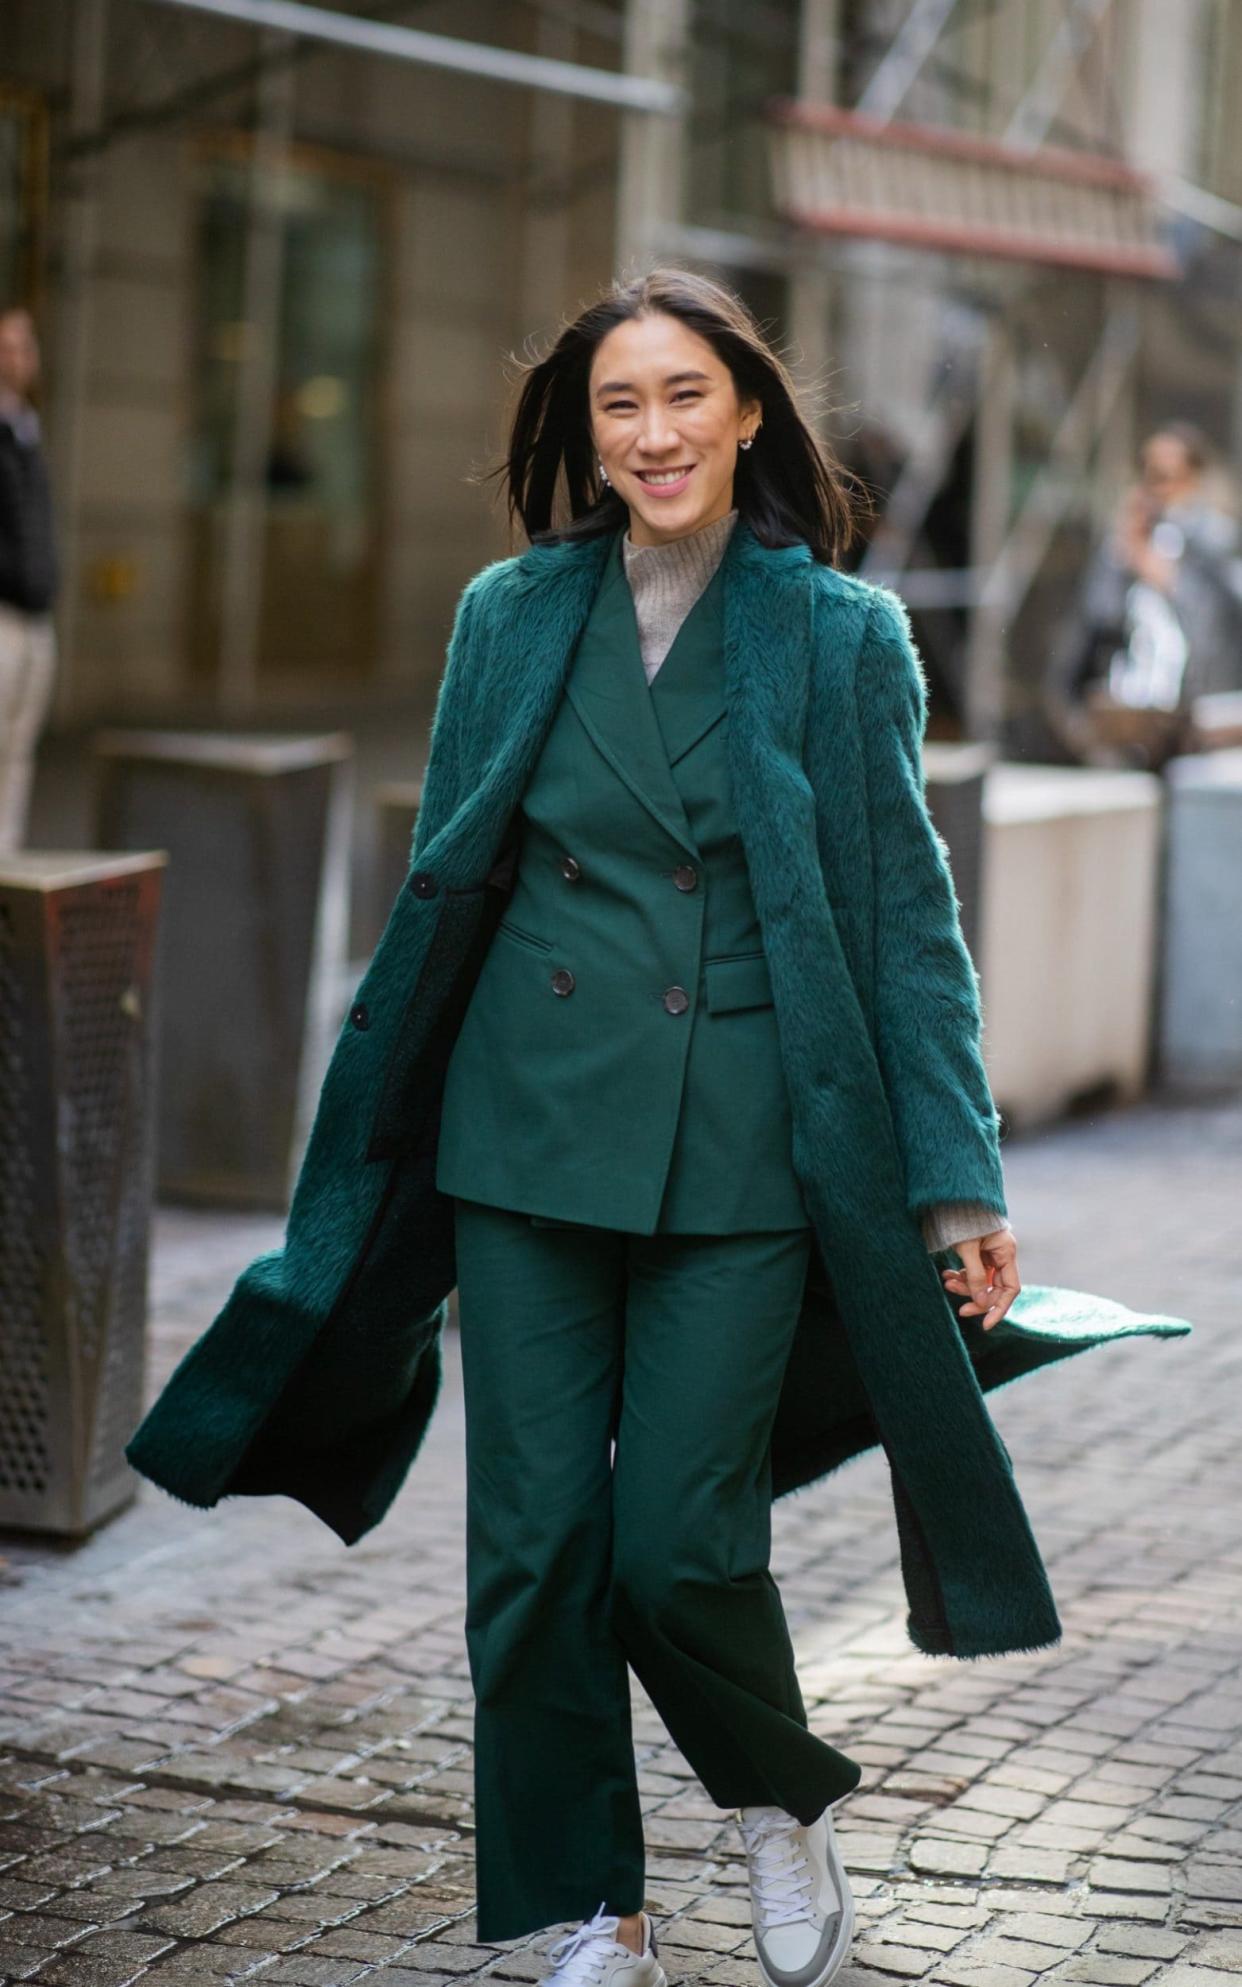 Eva Chen at New York Fashion Week - Getty Images North America